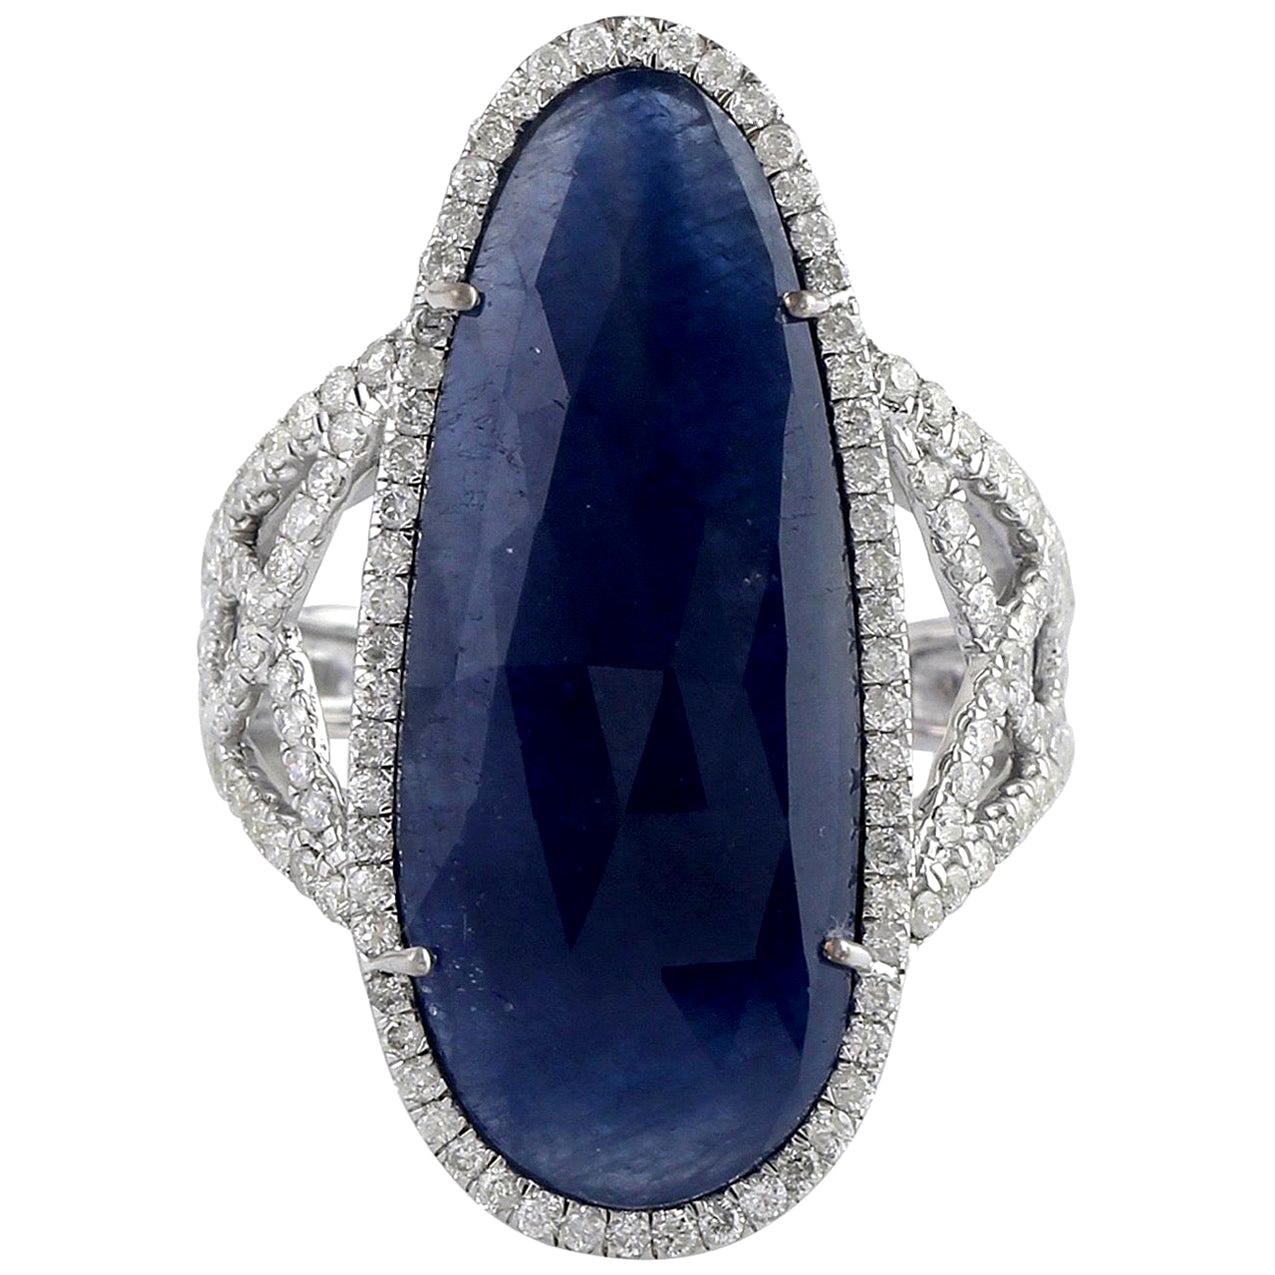 13.88 Carat Sapphire Diamond 18 Karat Cocktail Ring